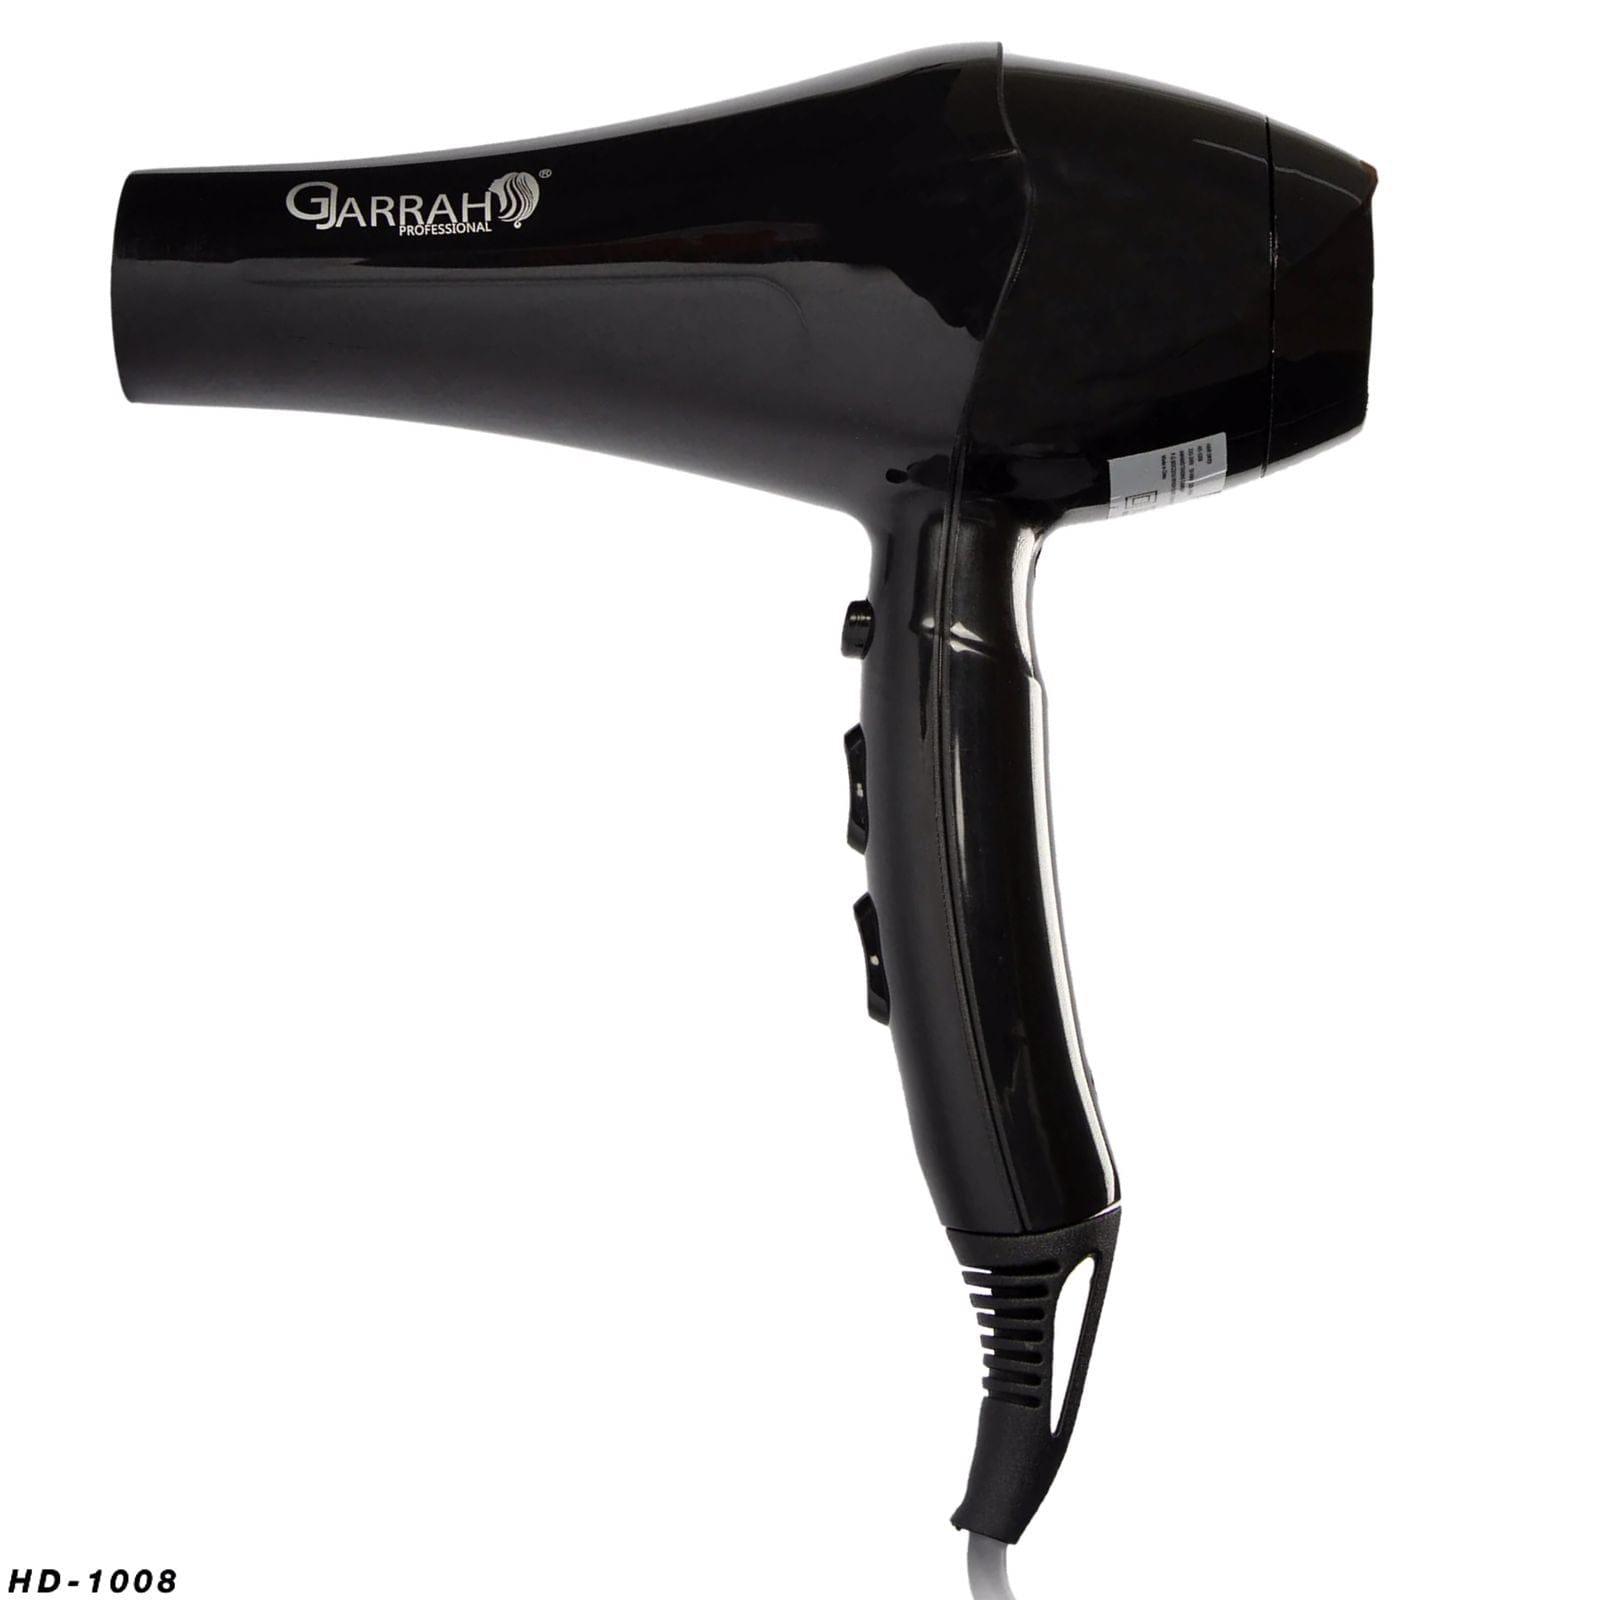 Gjarrah Professional Hair Dryer HD-1008